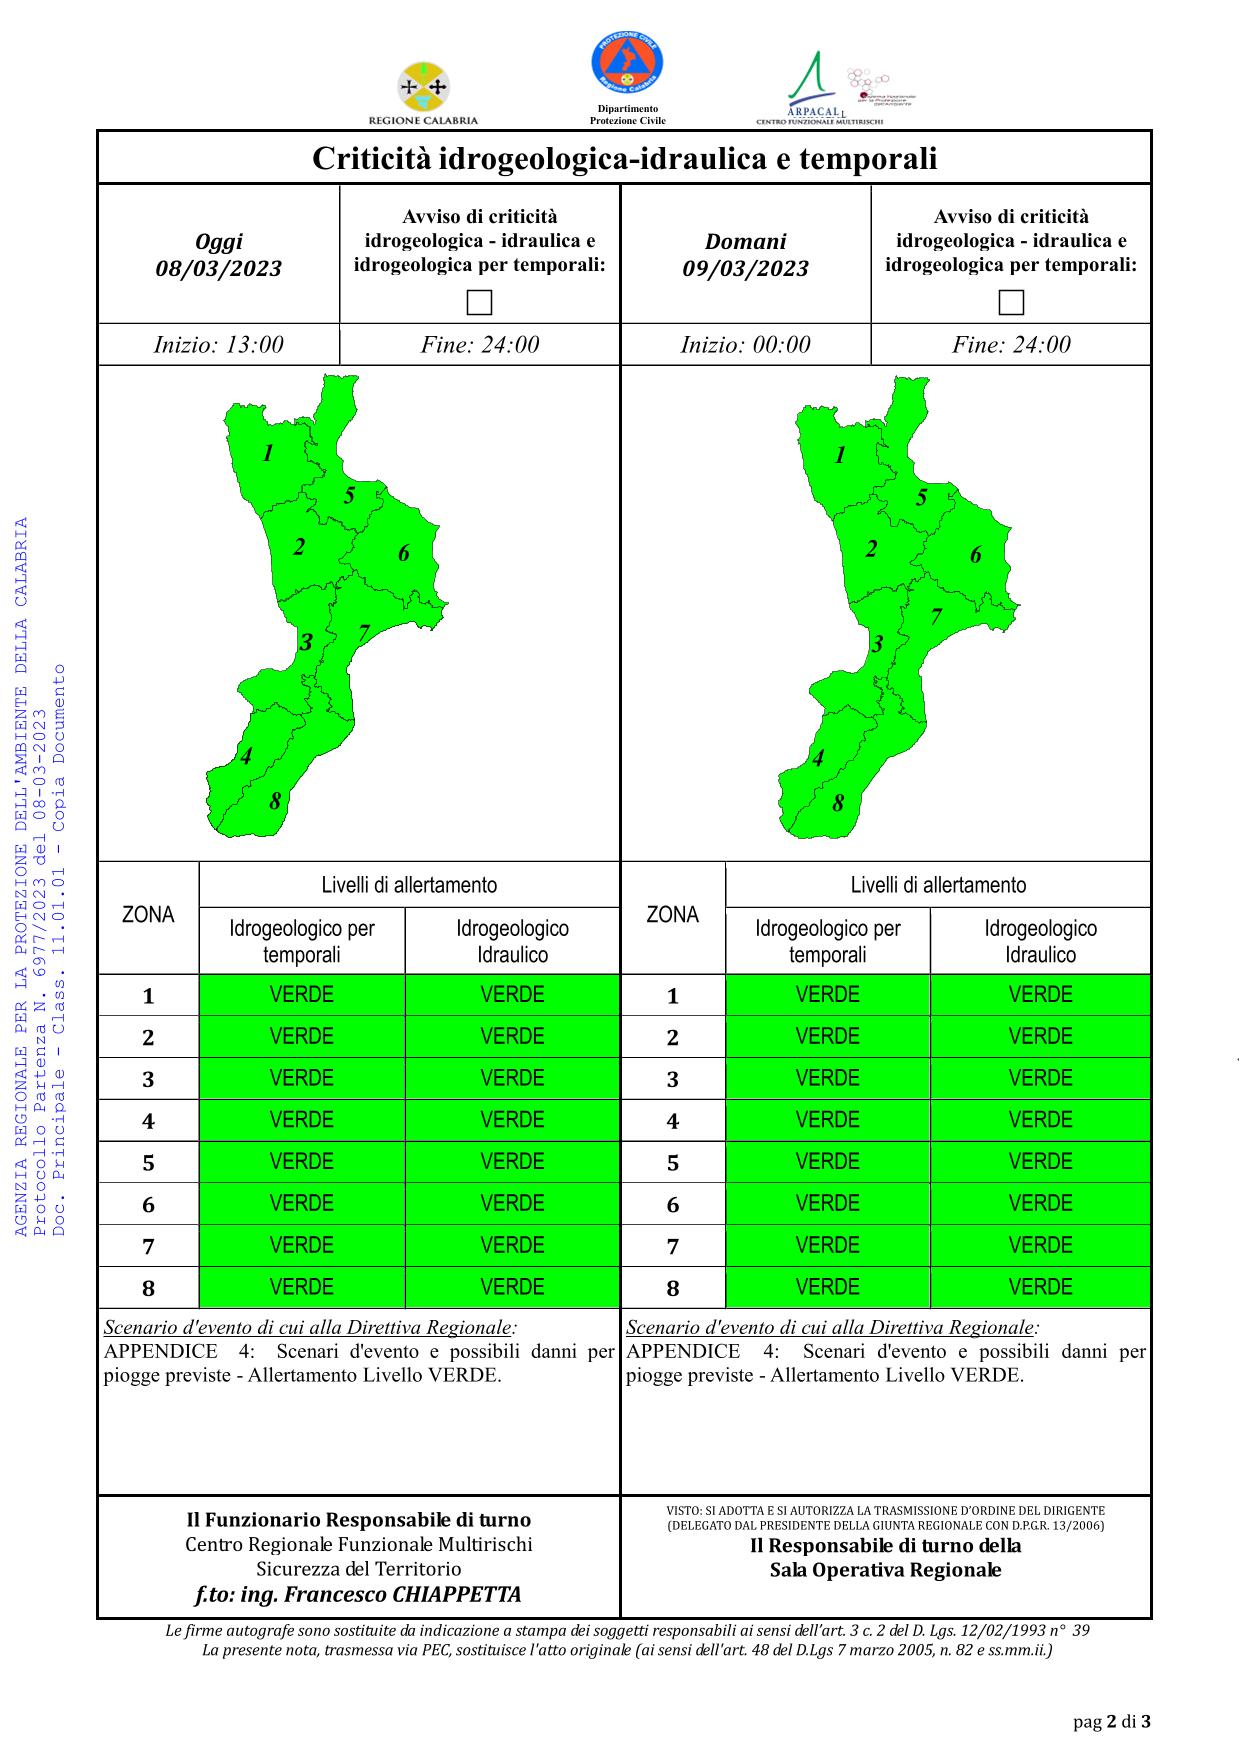 Criticità idrogeologica-idraulica e temporali in Calabria 08-03-2023